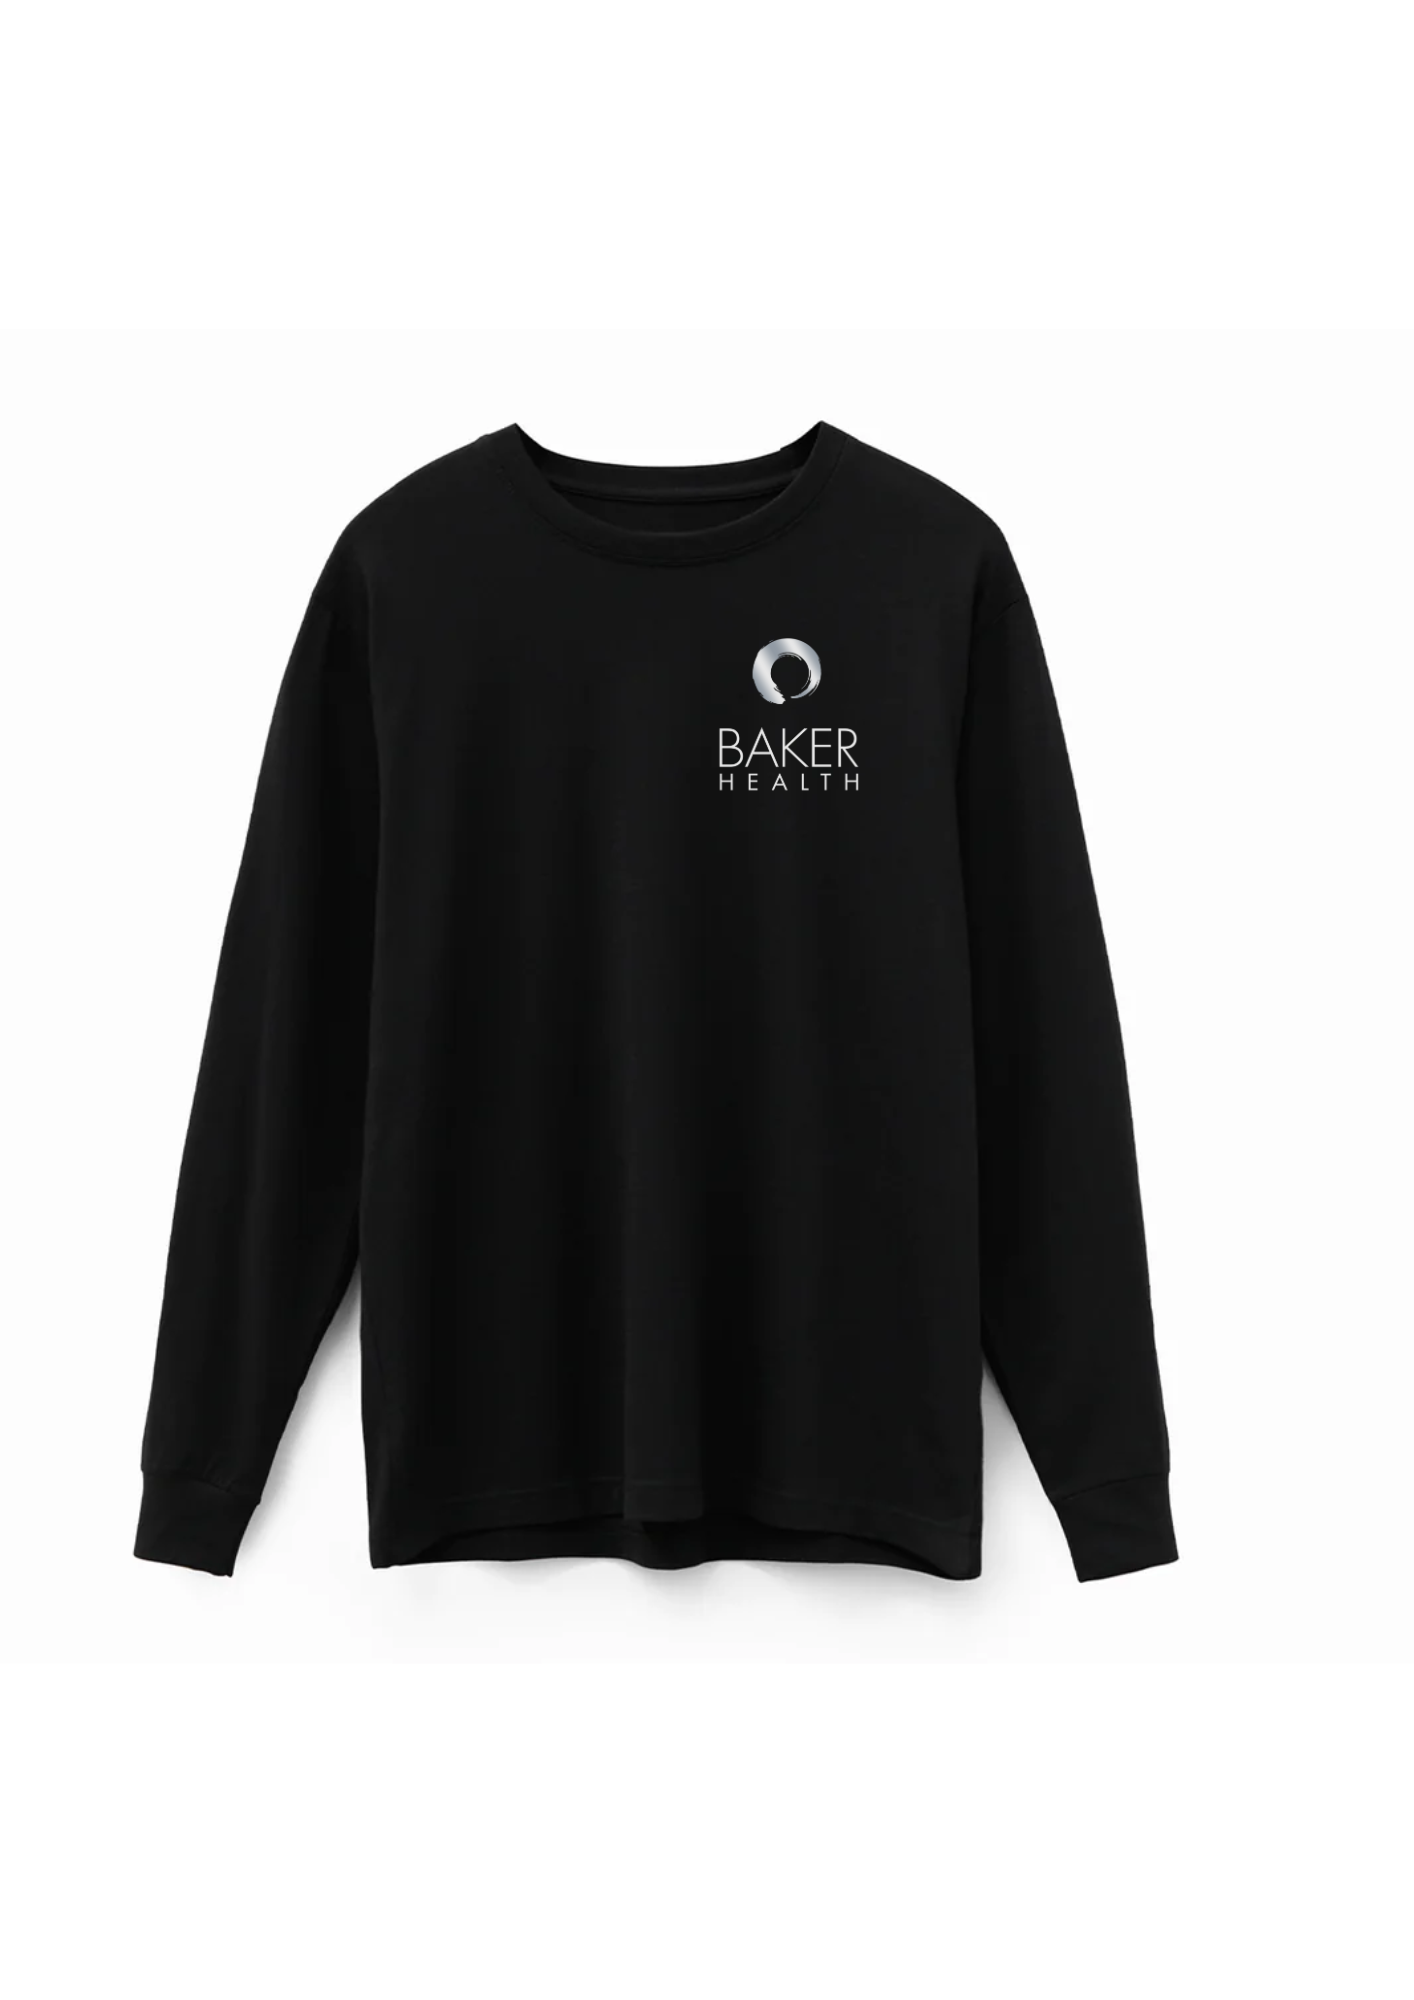 Baker Health With Logo - Unisex Long Sleeve T-Shirt